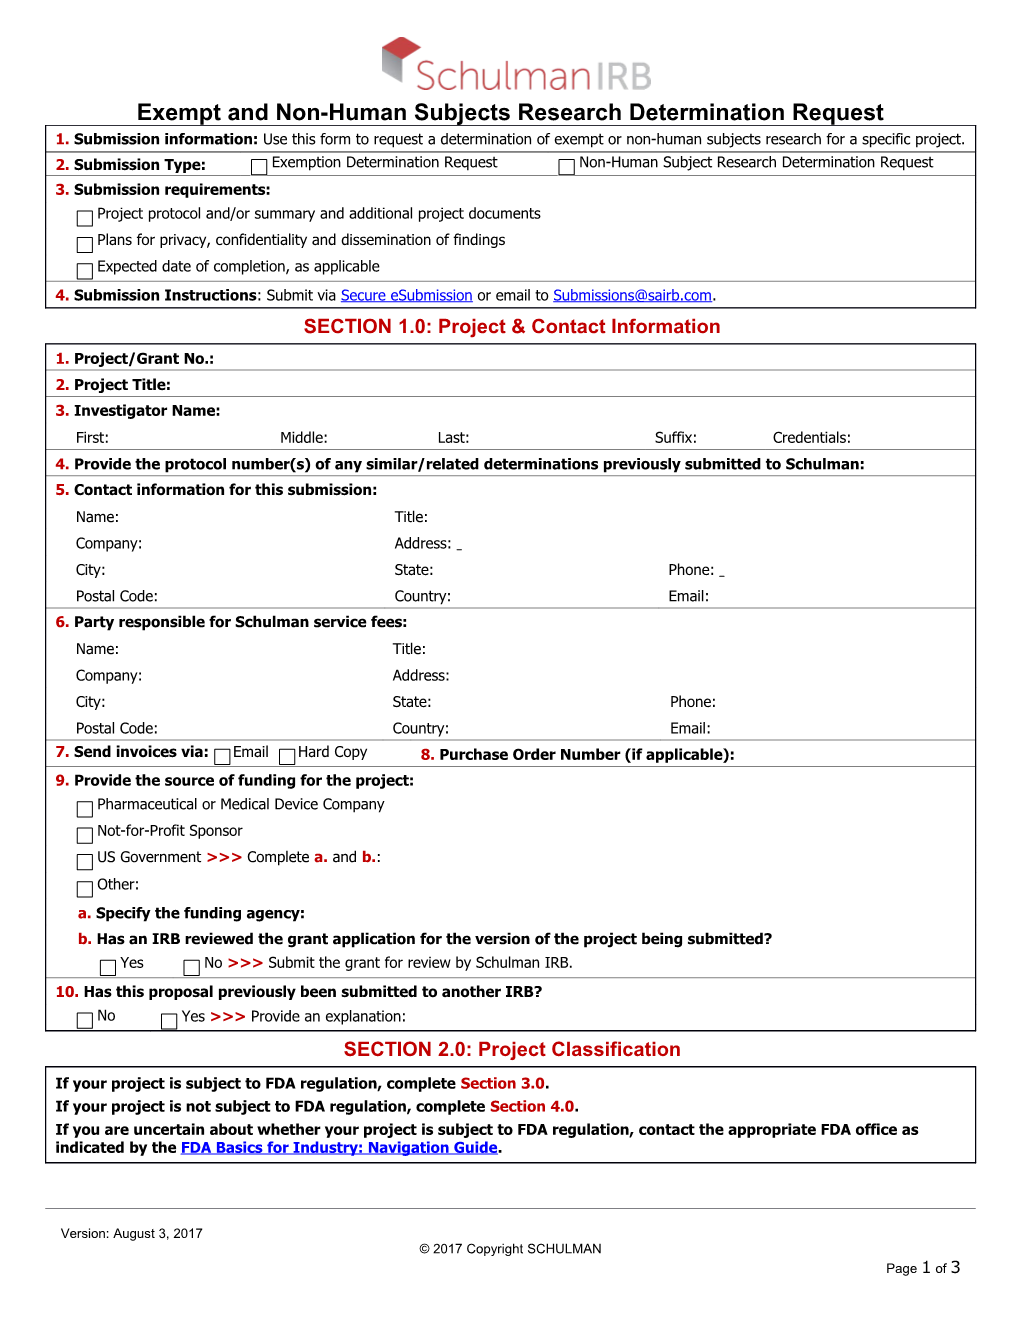 Request for Exemption Determination Form